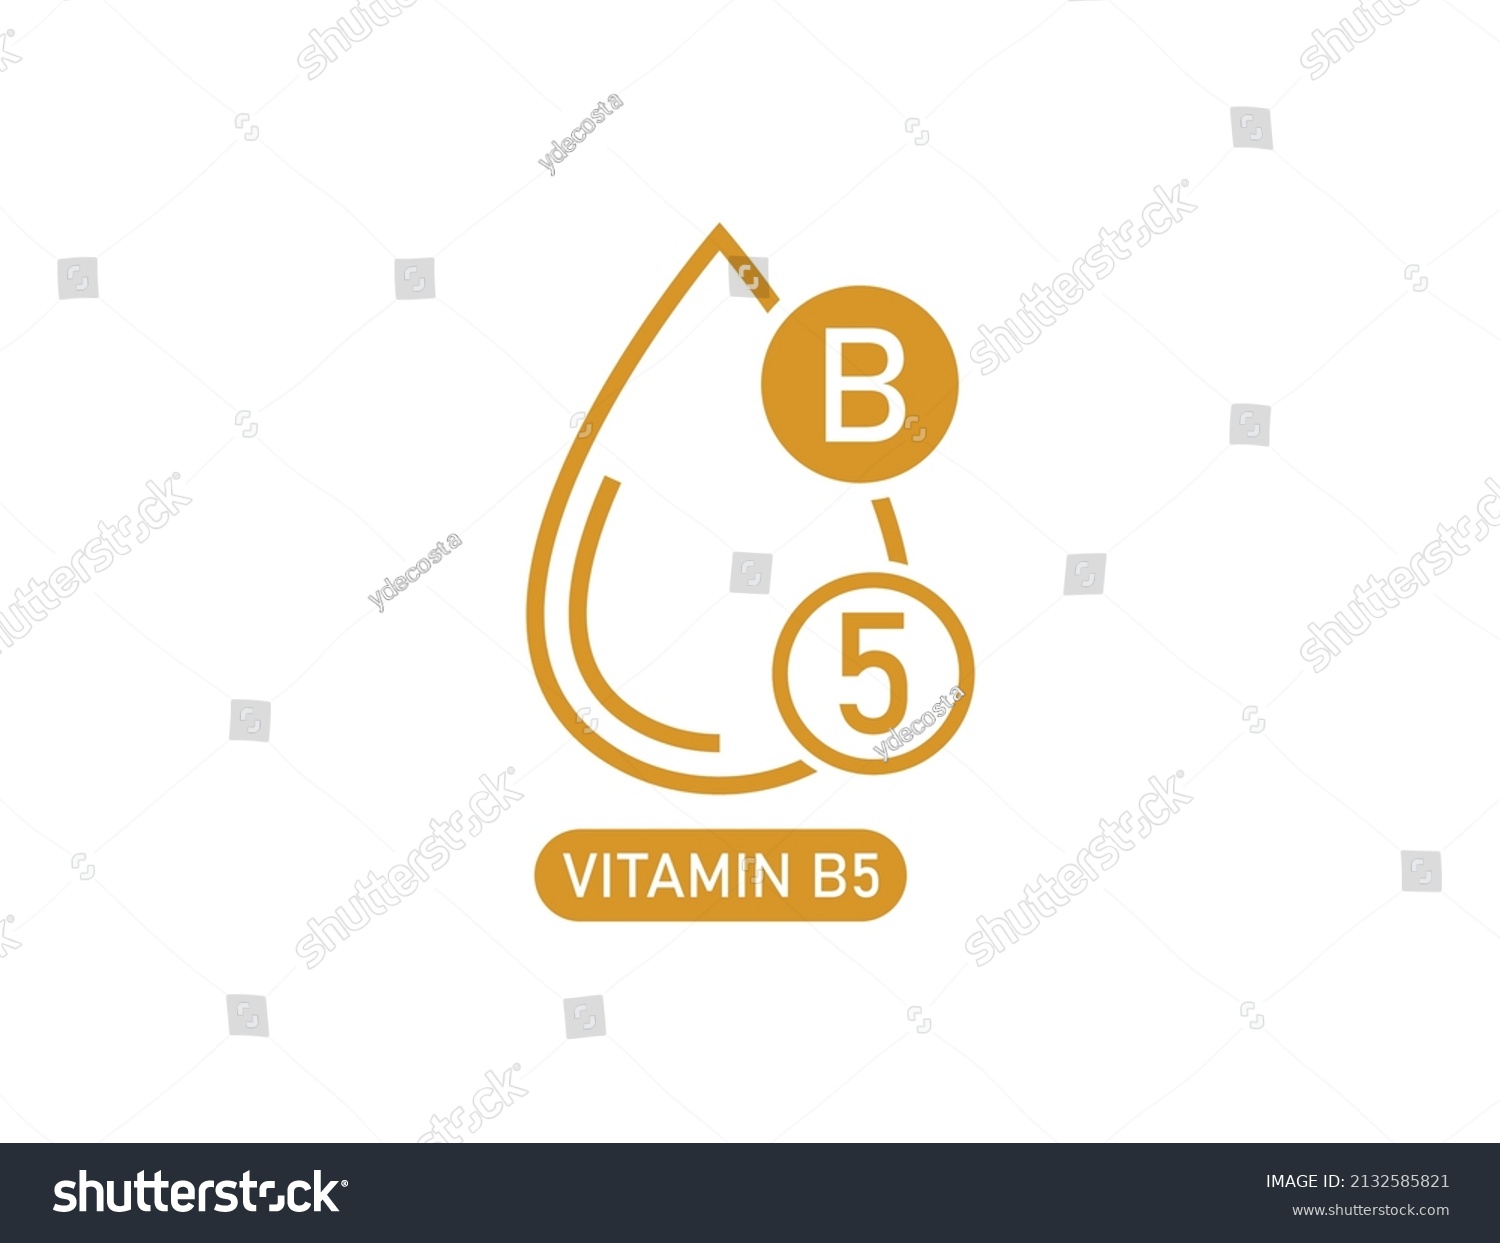 vitamin b5 logo, icon, drop vector illustration  #2132585821